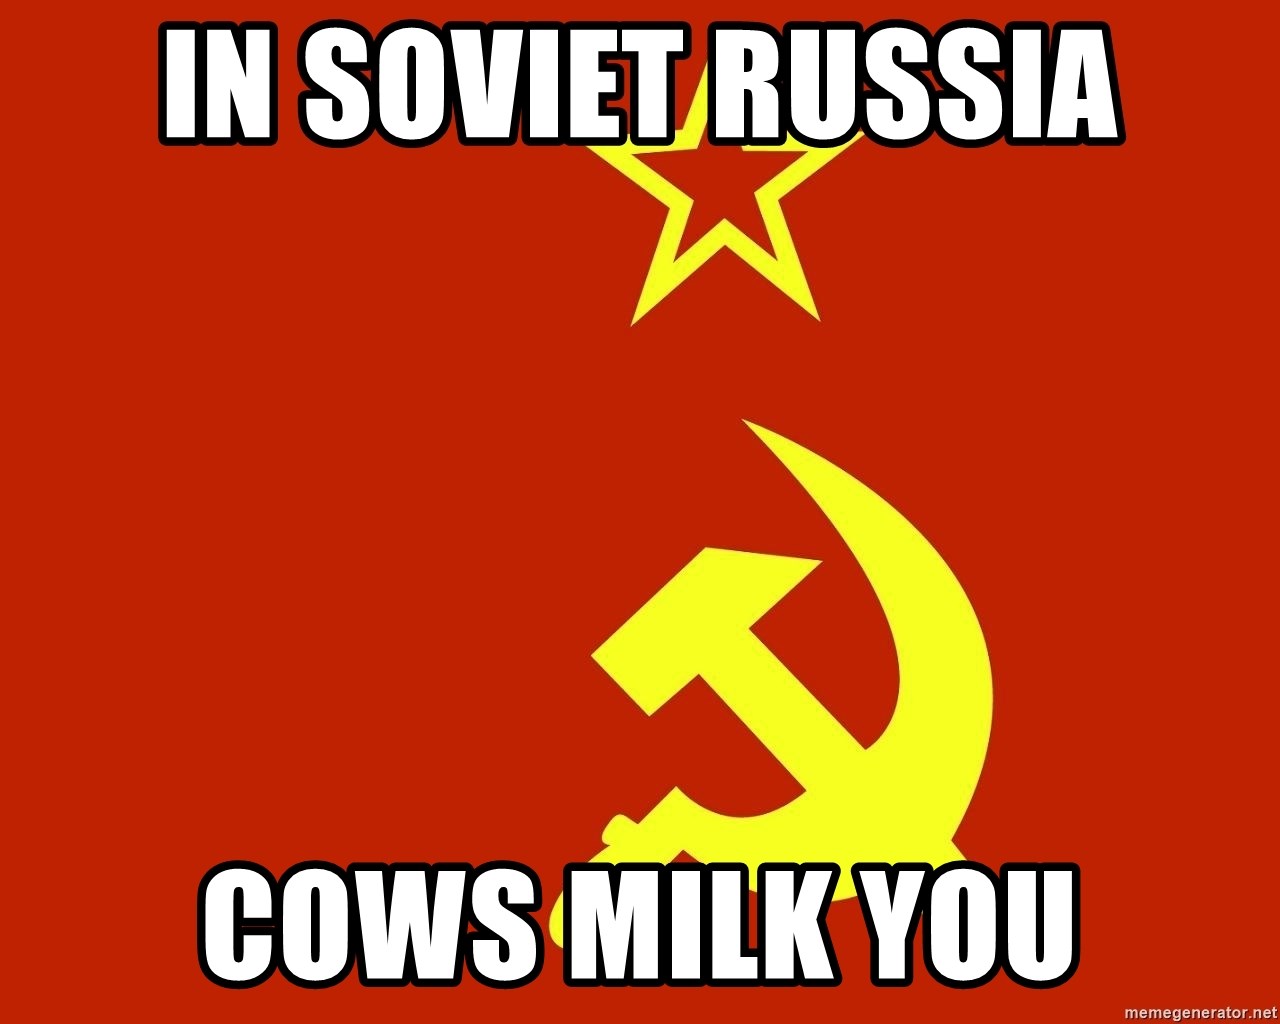 In Soviet Russia - in soviet russia cows milk you